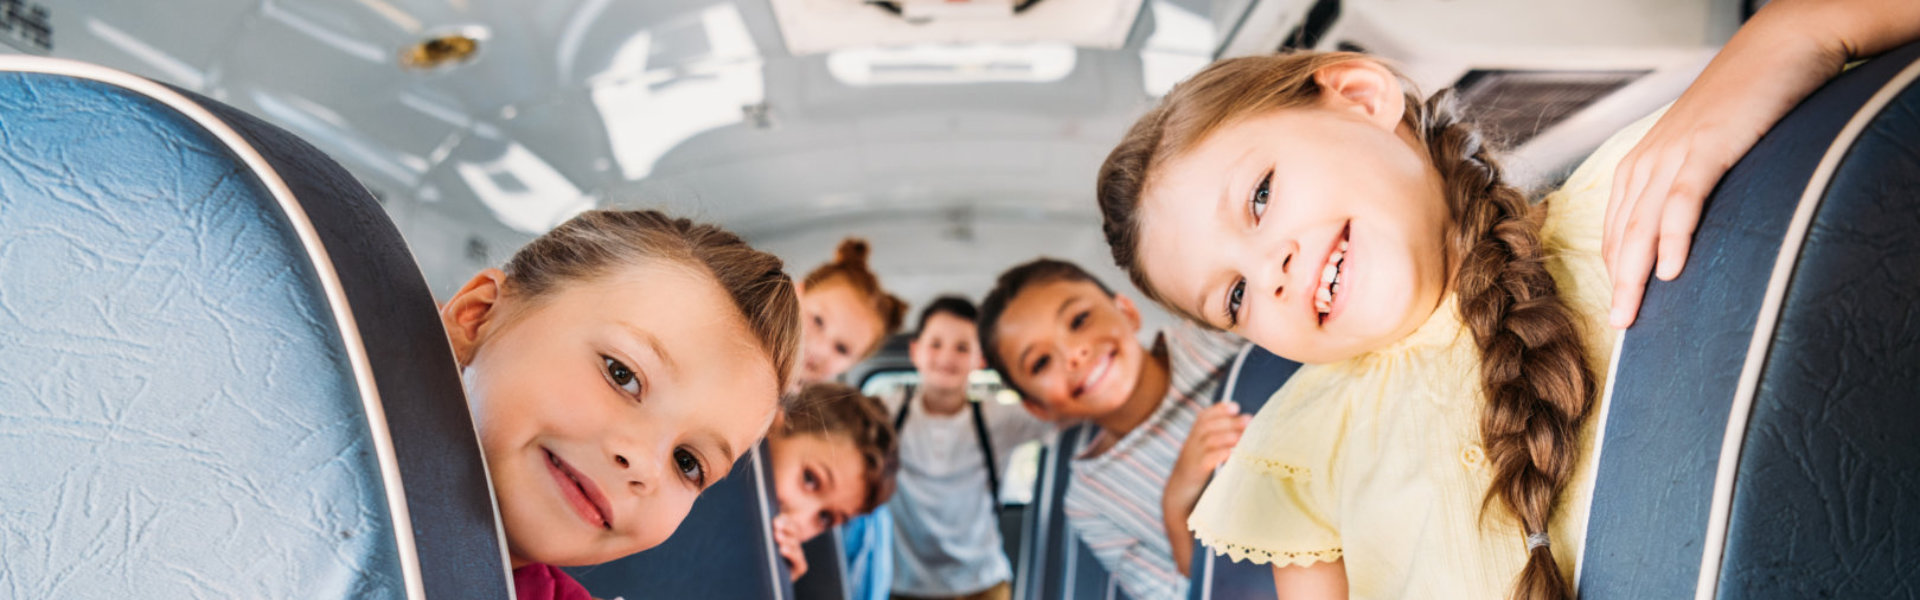 group of cute schoolchildren riding on school bus